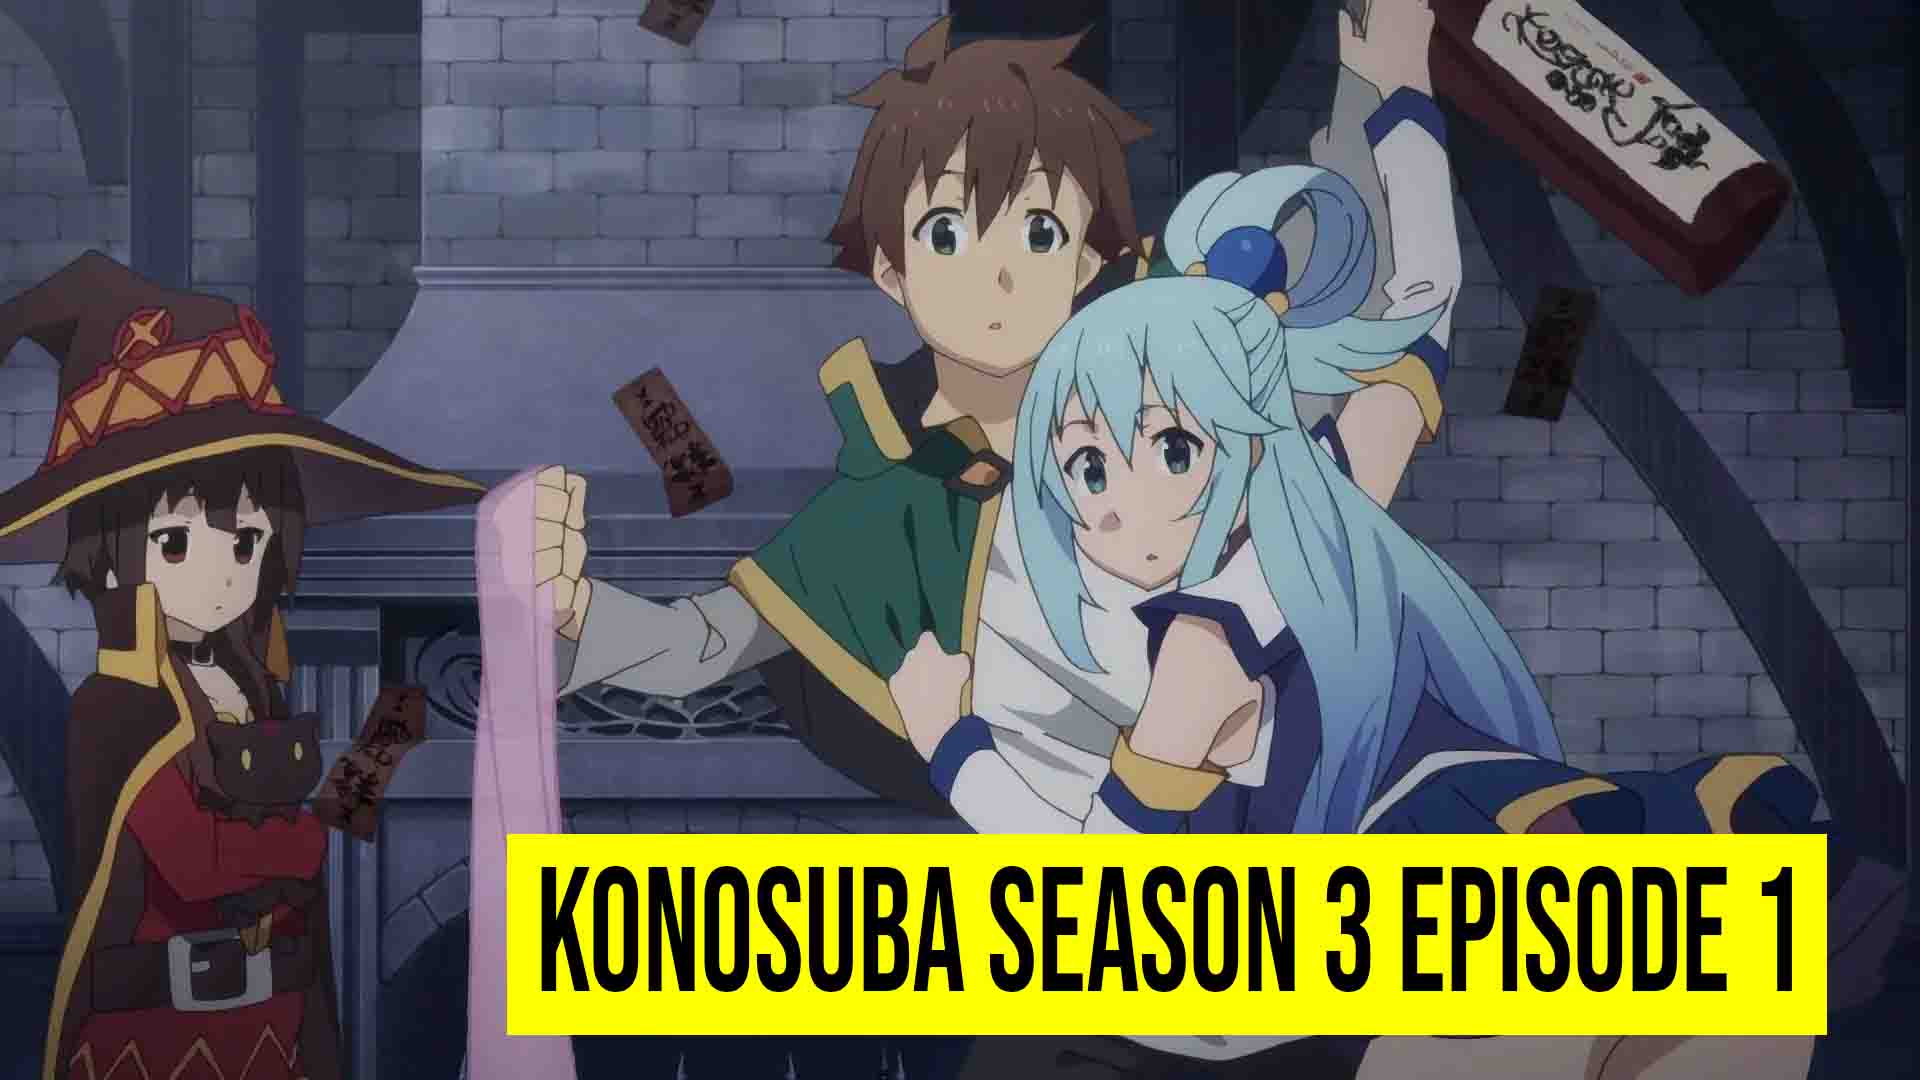 Konosuba Season 3 Episode 1 “Confirm” Release Date and Time!